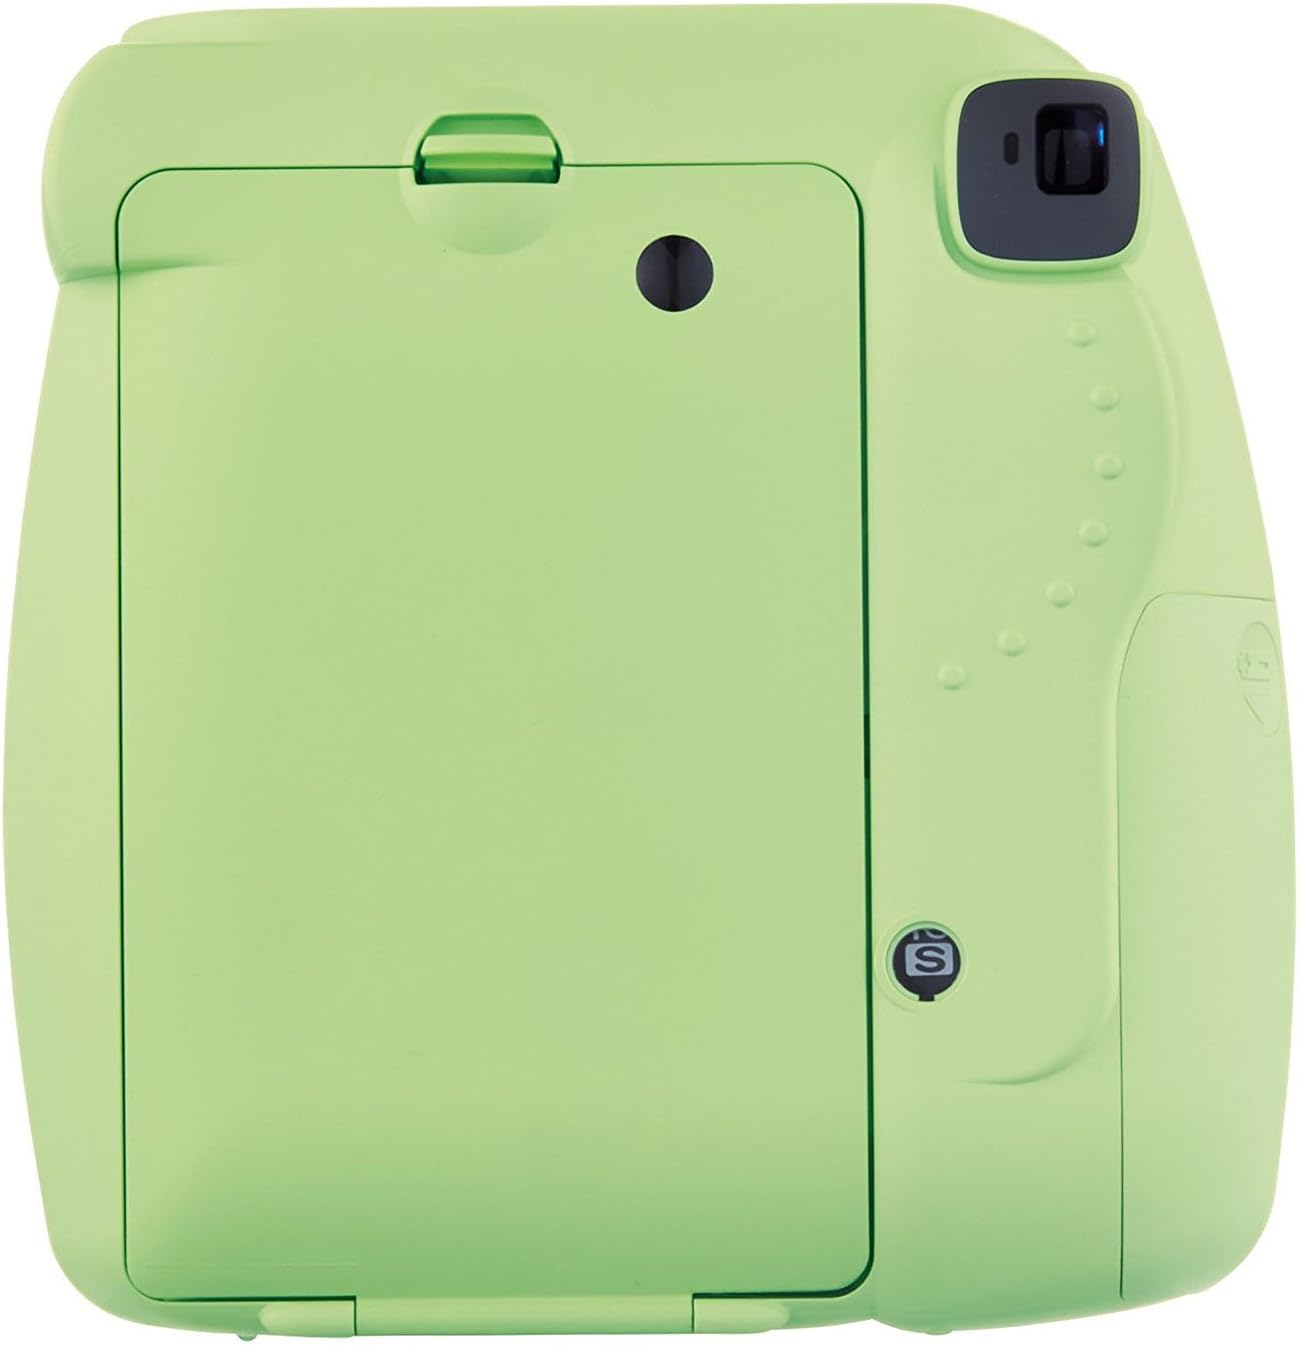 Fujifilm Instax Mini 9 Camera - Lime Green